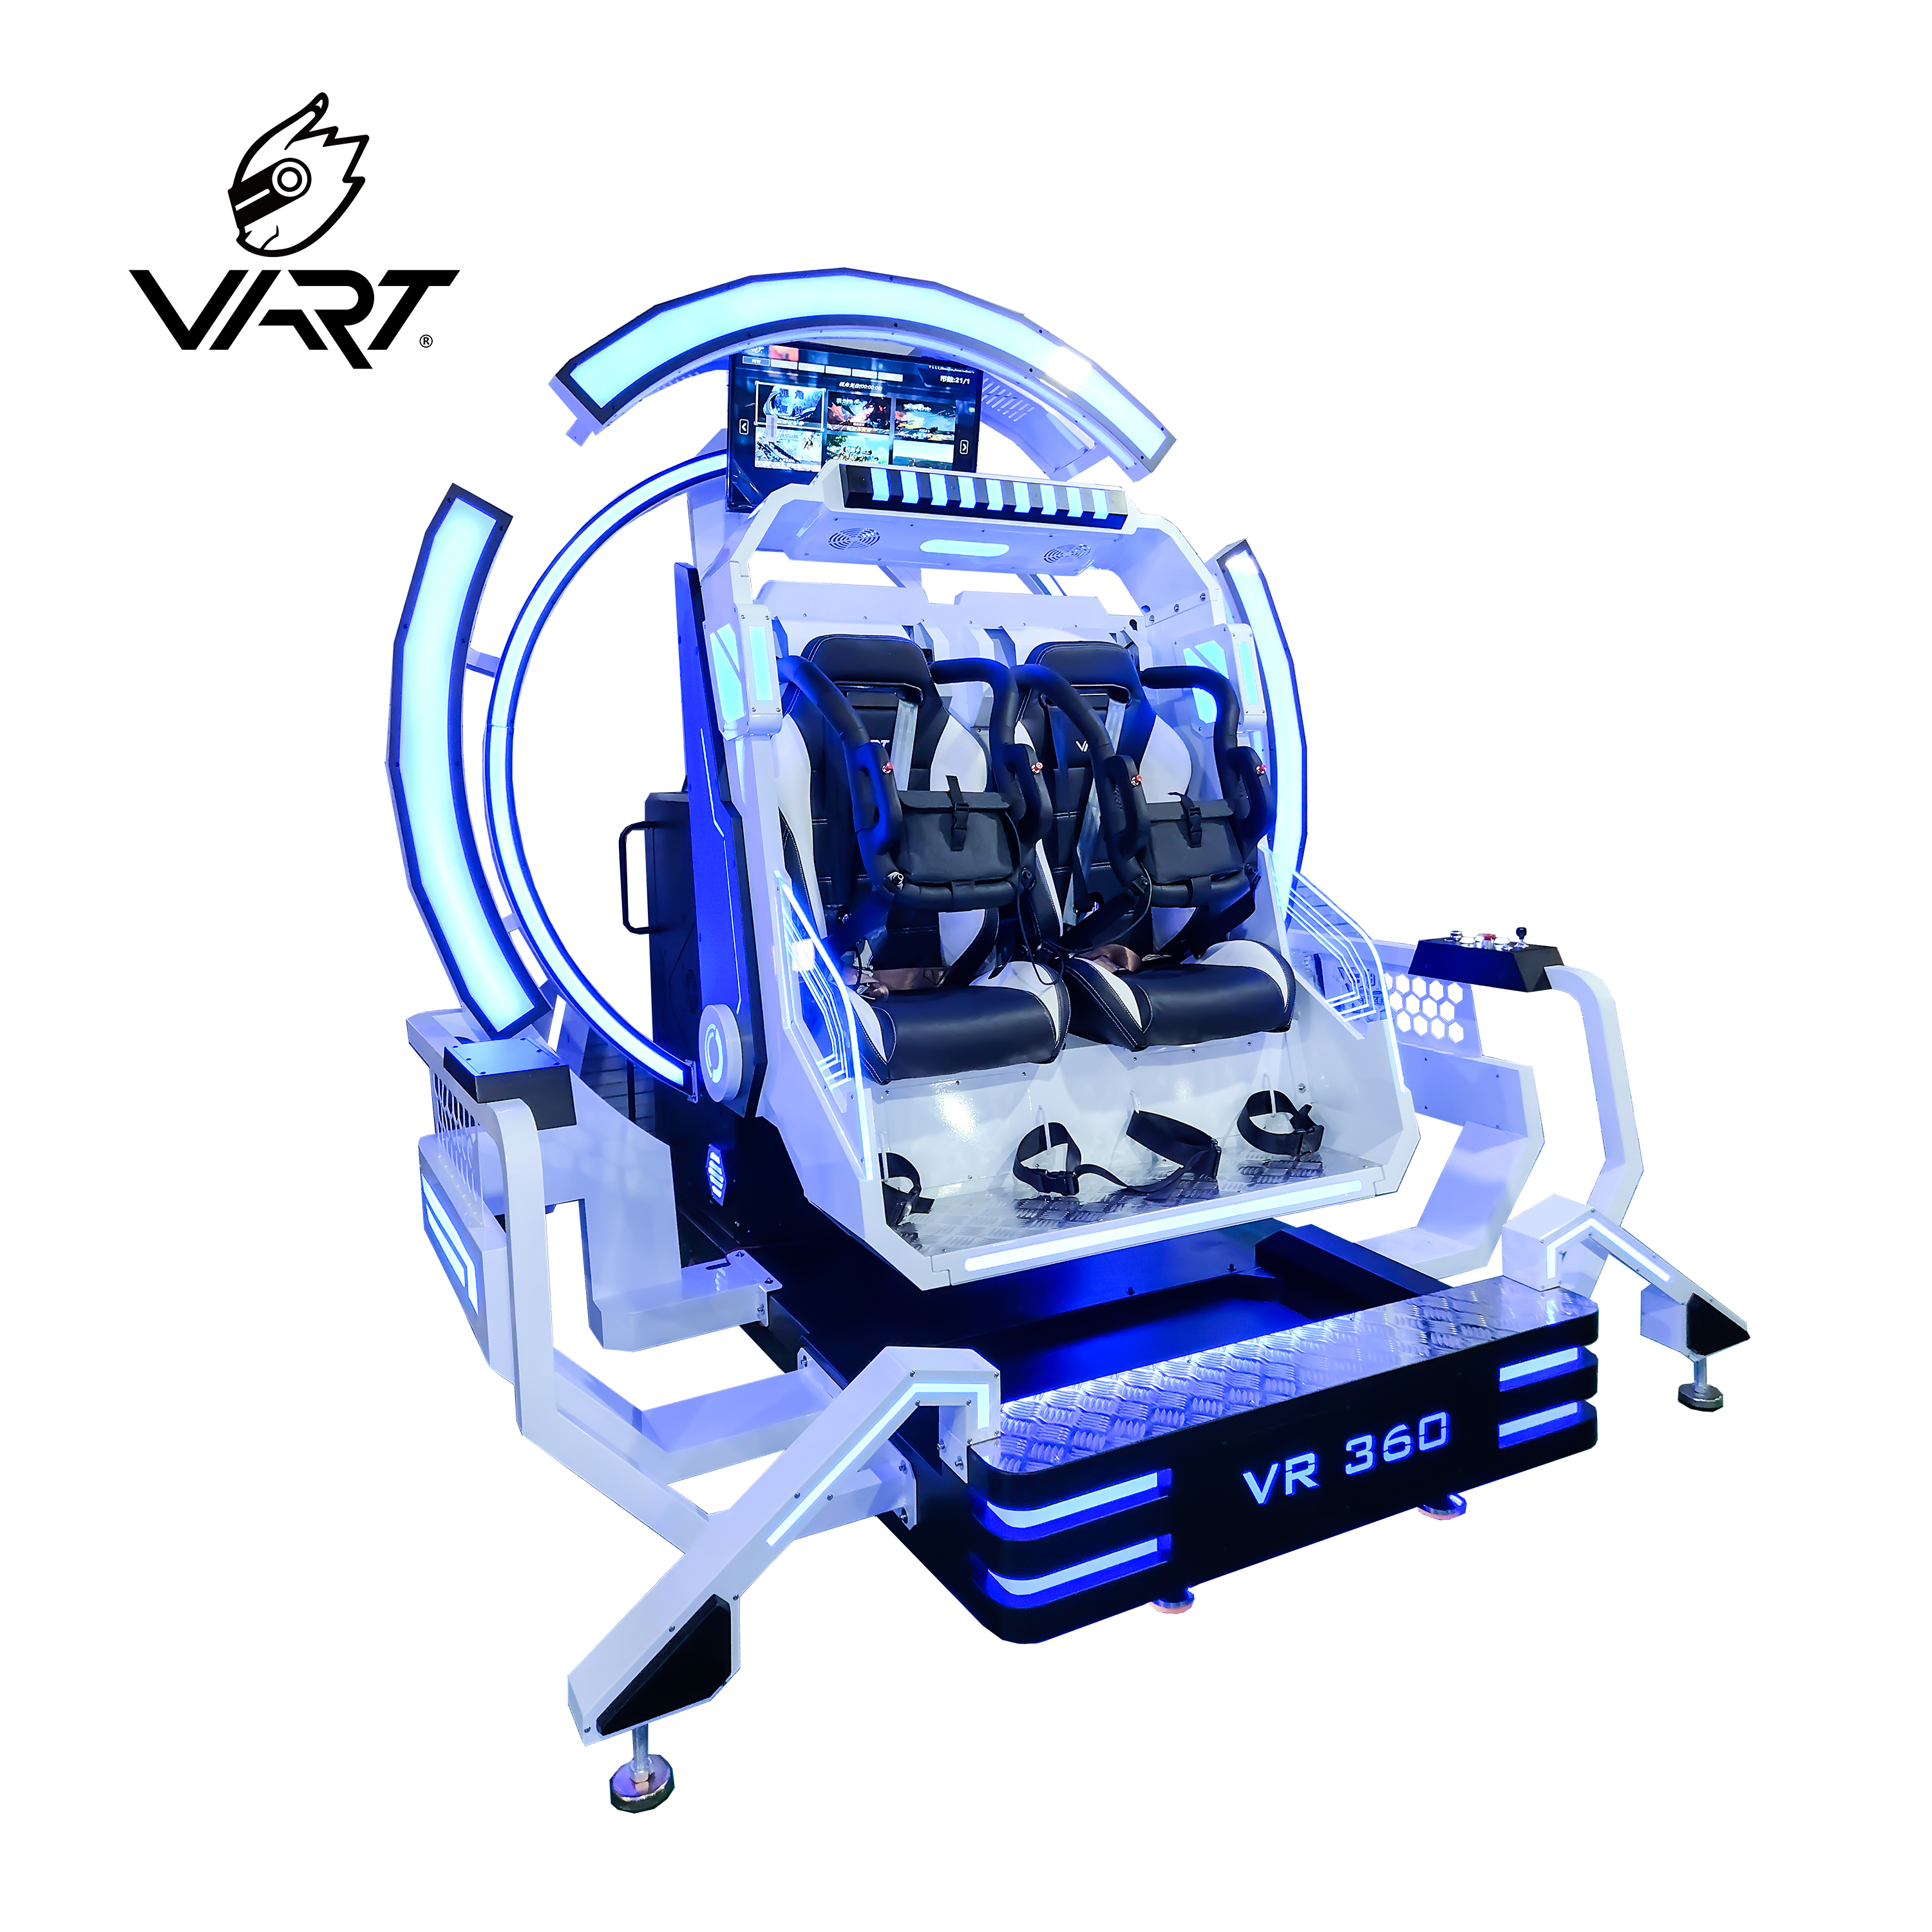 VART 2 ਸੀਟਰ VR 360 ਕੁਰਸੀ